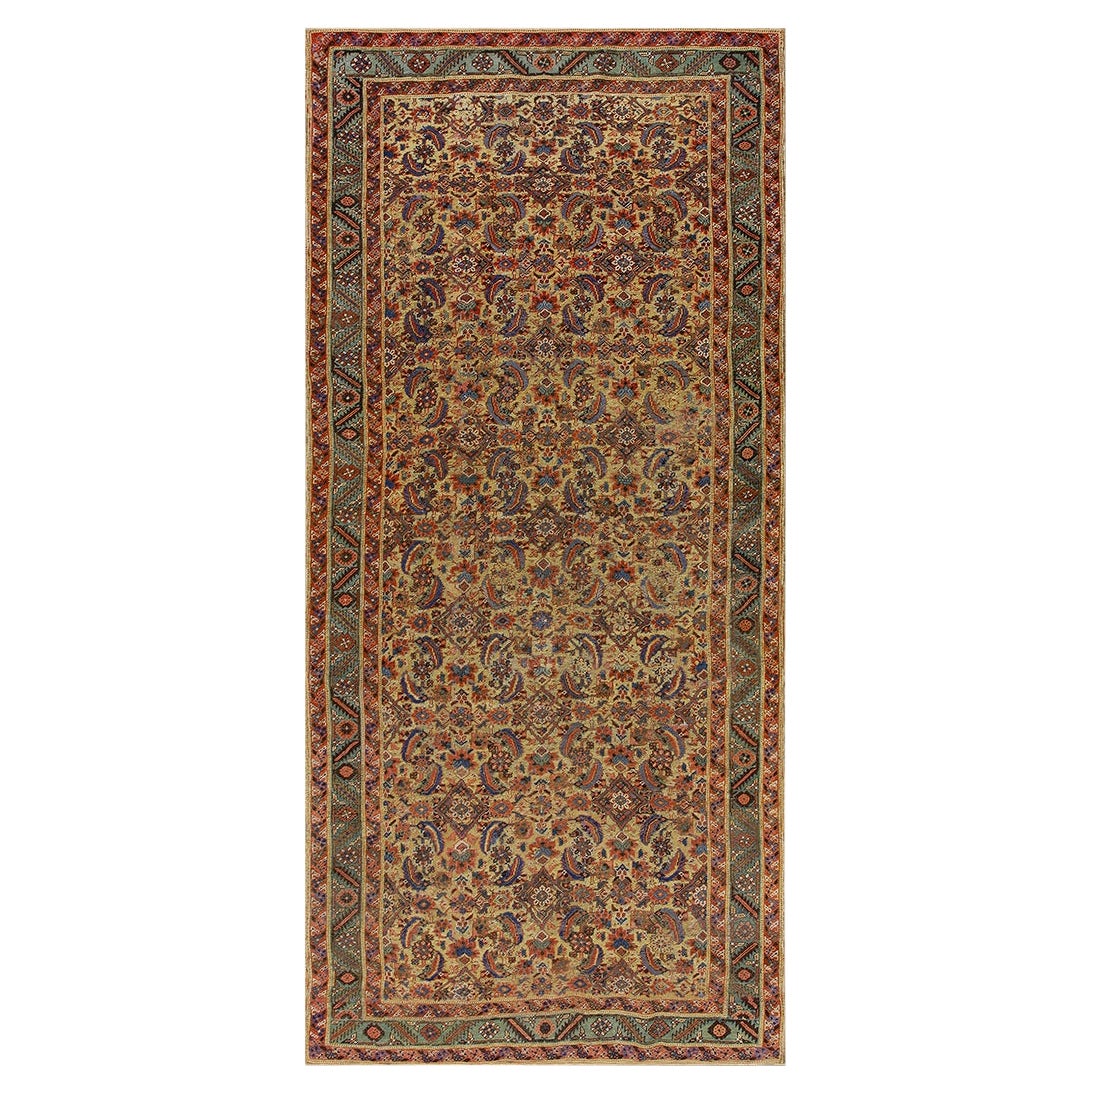 19th Century N.W. Persian Bakshaiesh Carpet ( 5'9" x  12'6" - 175 x 380 )